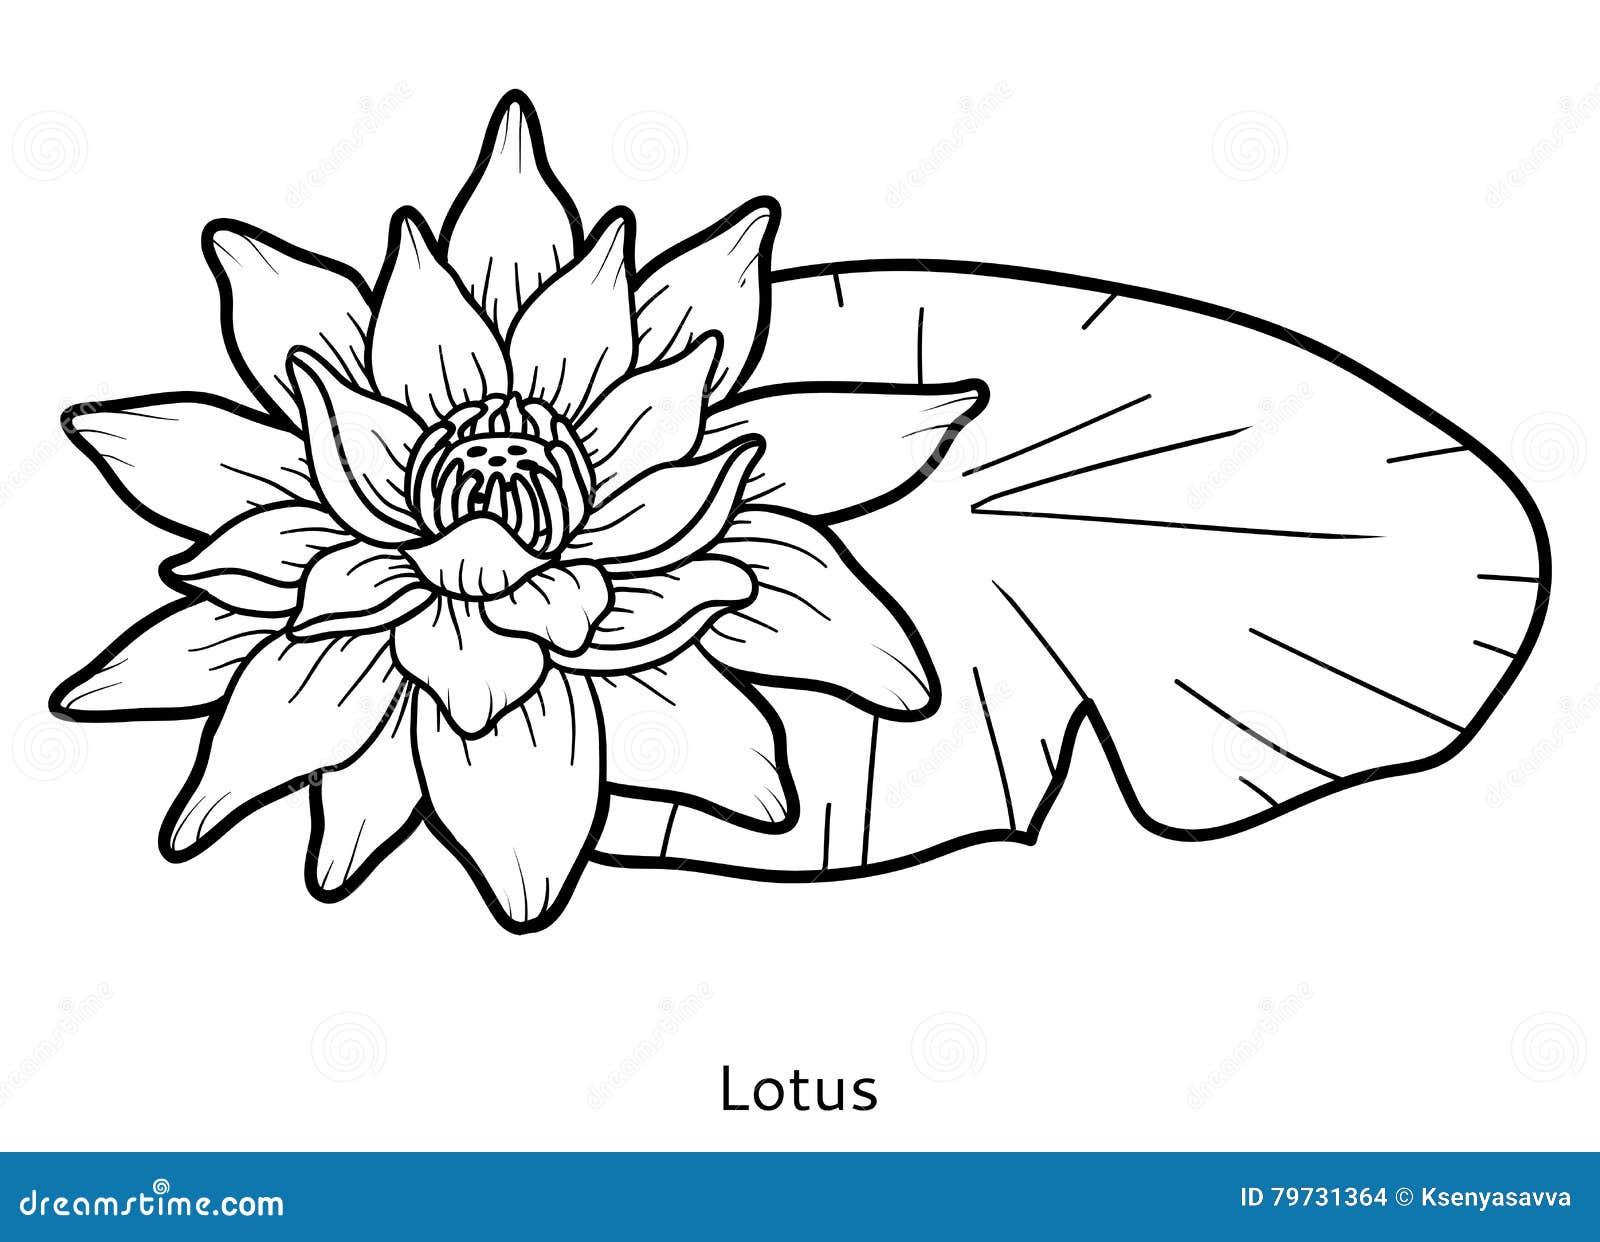 Lisa Lorenz Studio Blog: New Painting Idea/Sketch - Lotus flowers